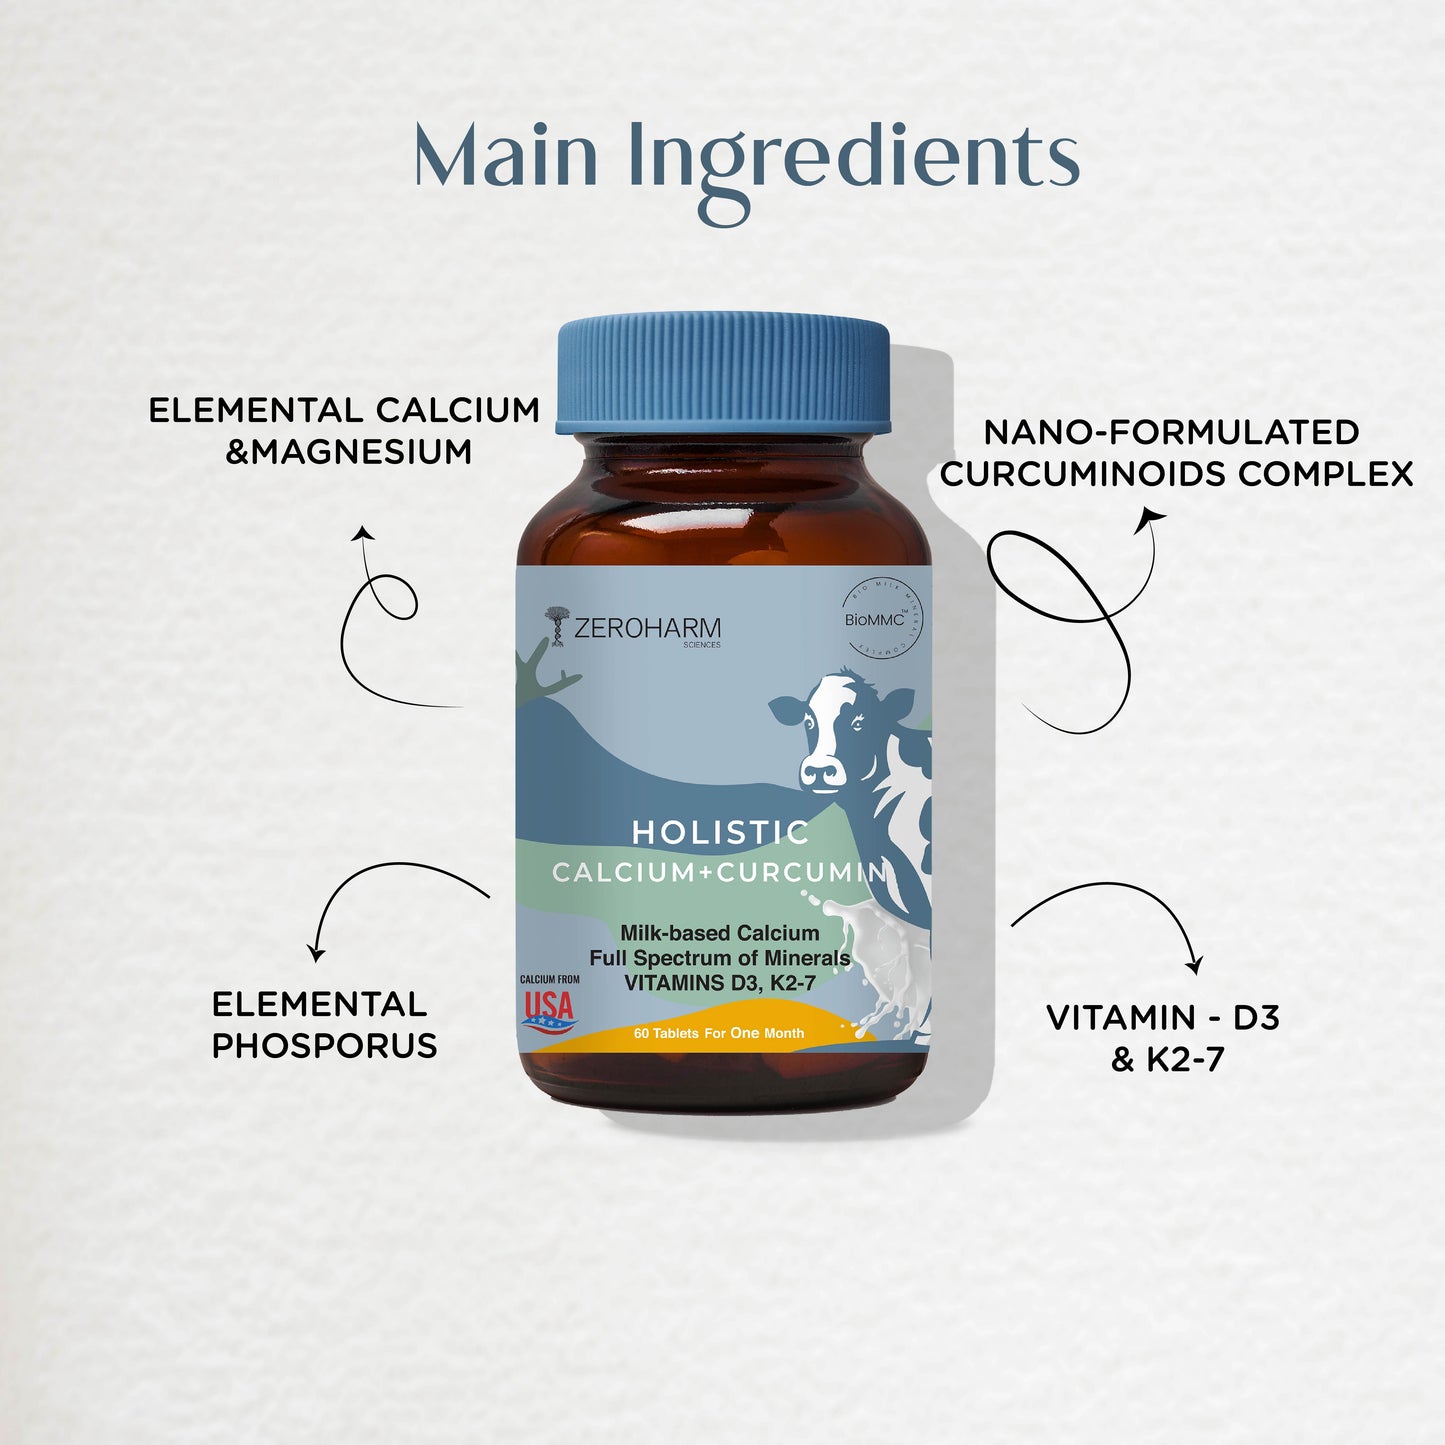 Holistic Calcium And Curcumin Supplements